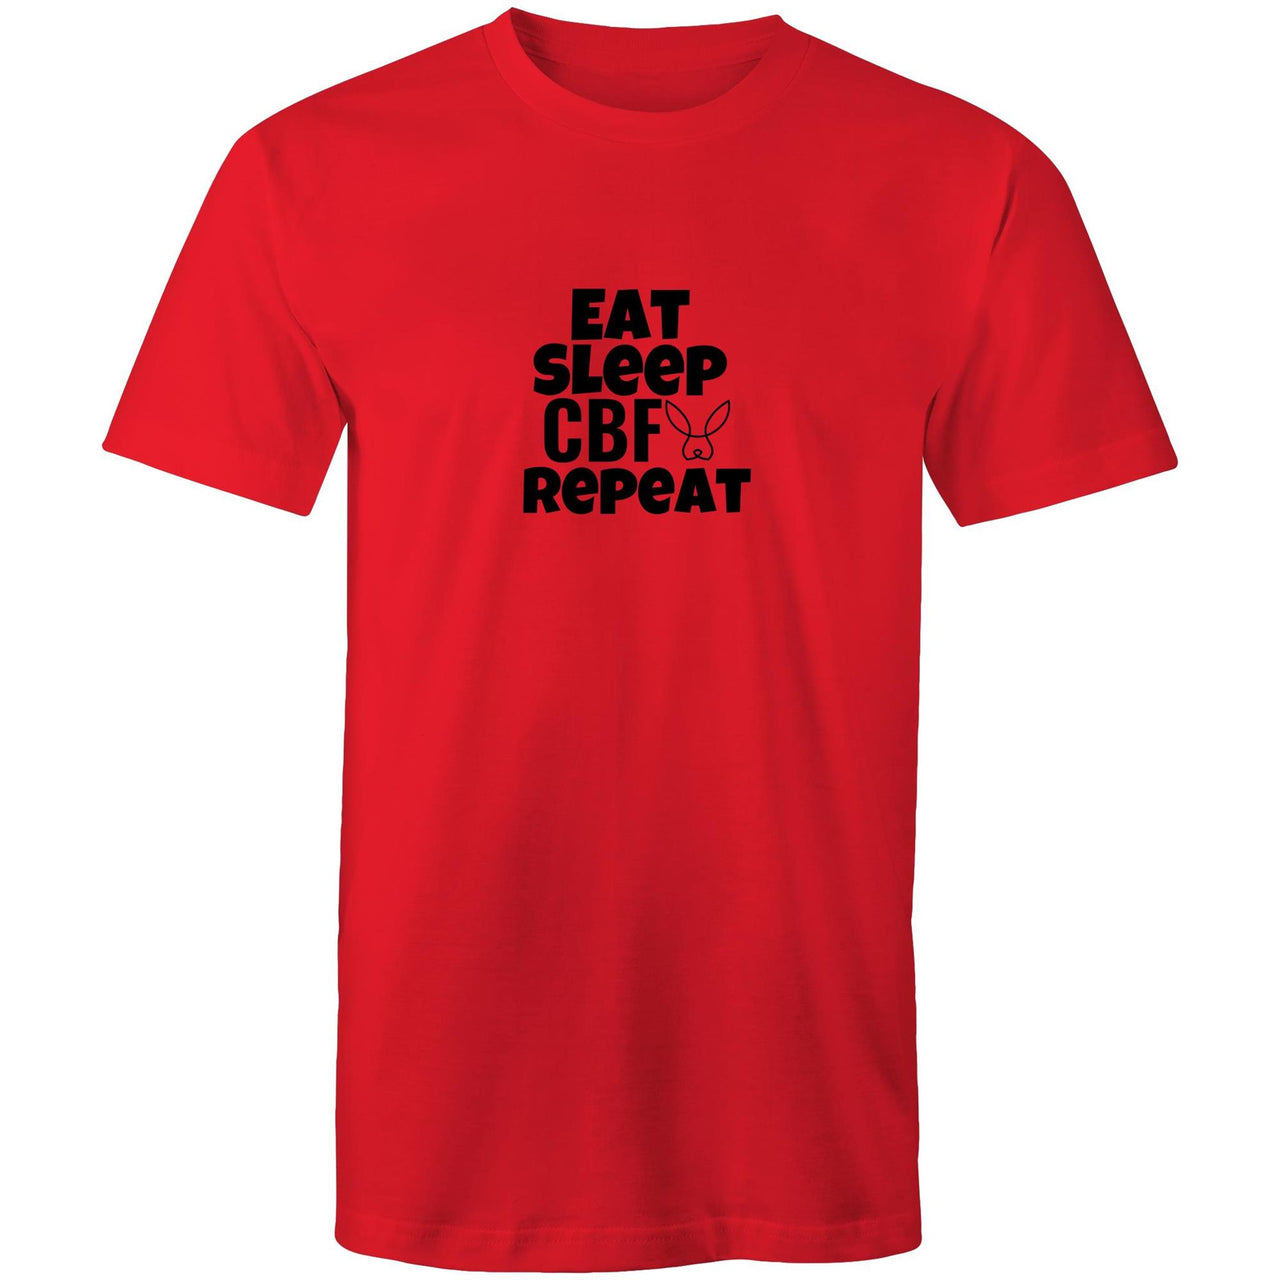 Eat Sleep CBF Repeat Crew Red T-Shirt by CBF Clothing